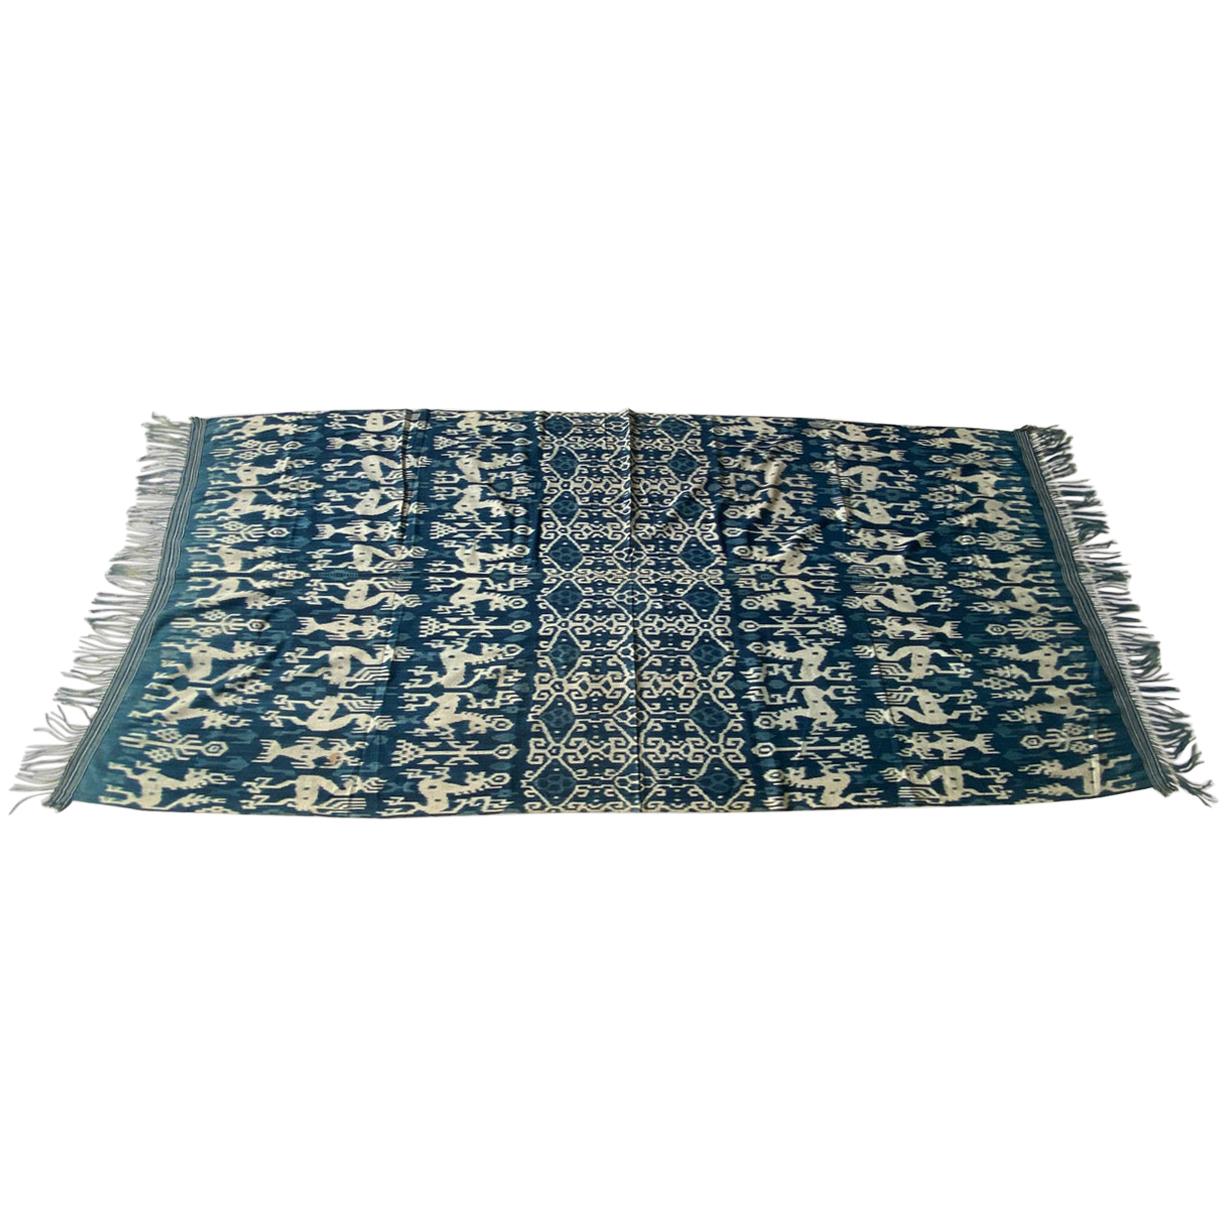 Andrianna Shamaris Rare Bold indigo Cotton Sumba Textile